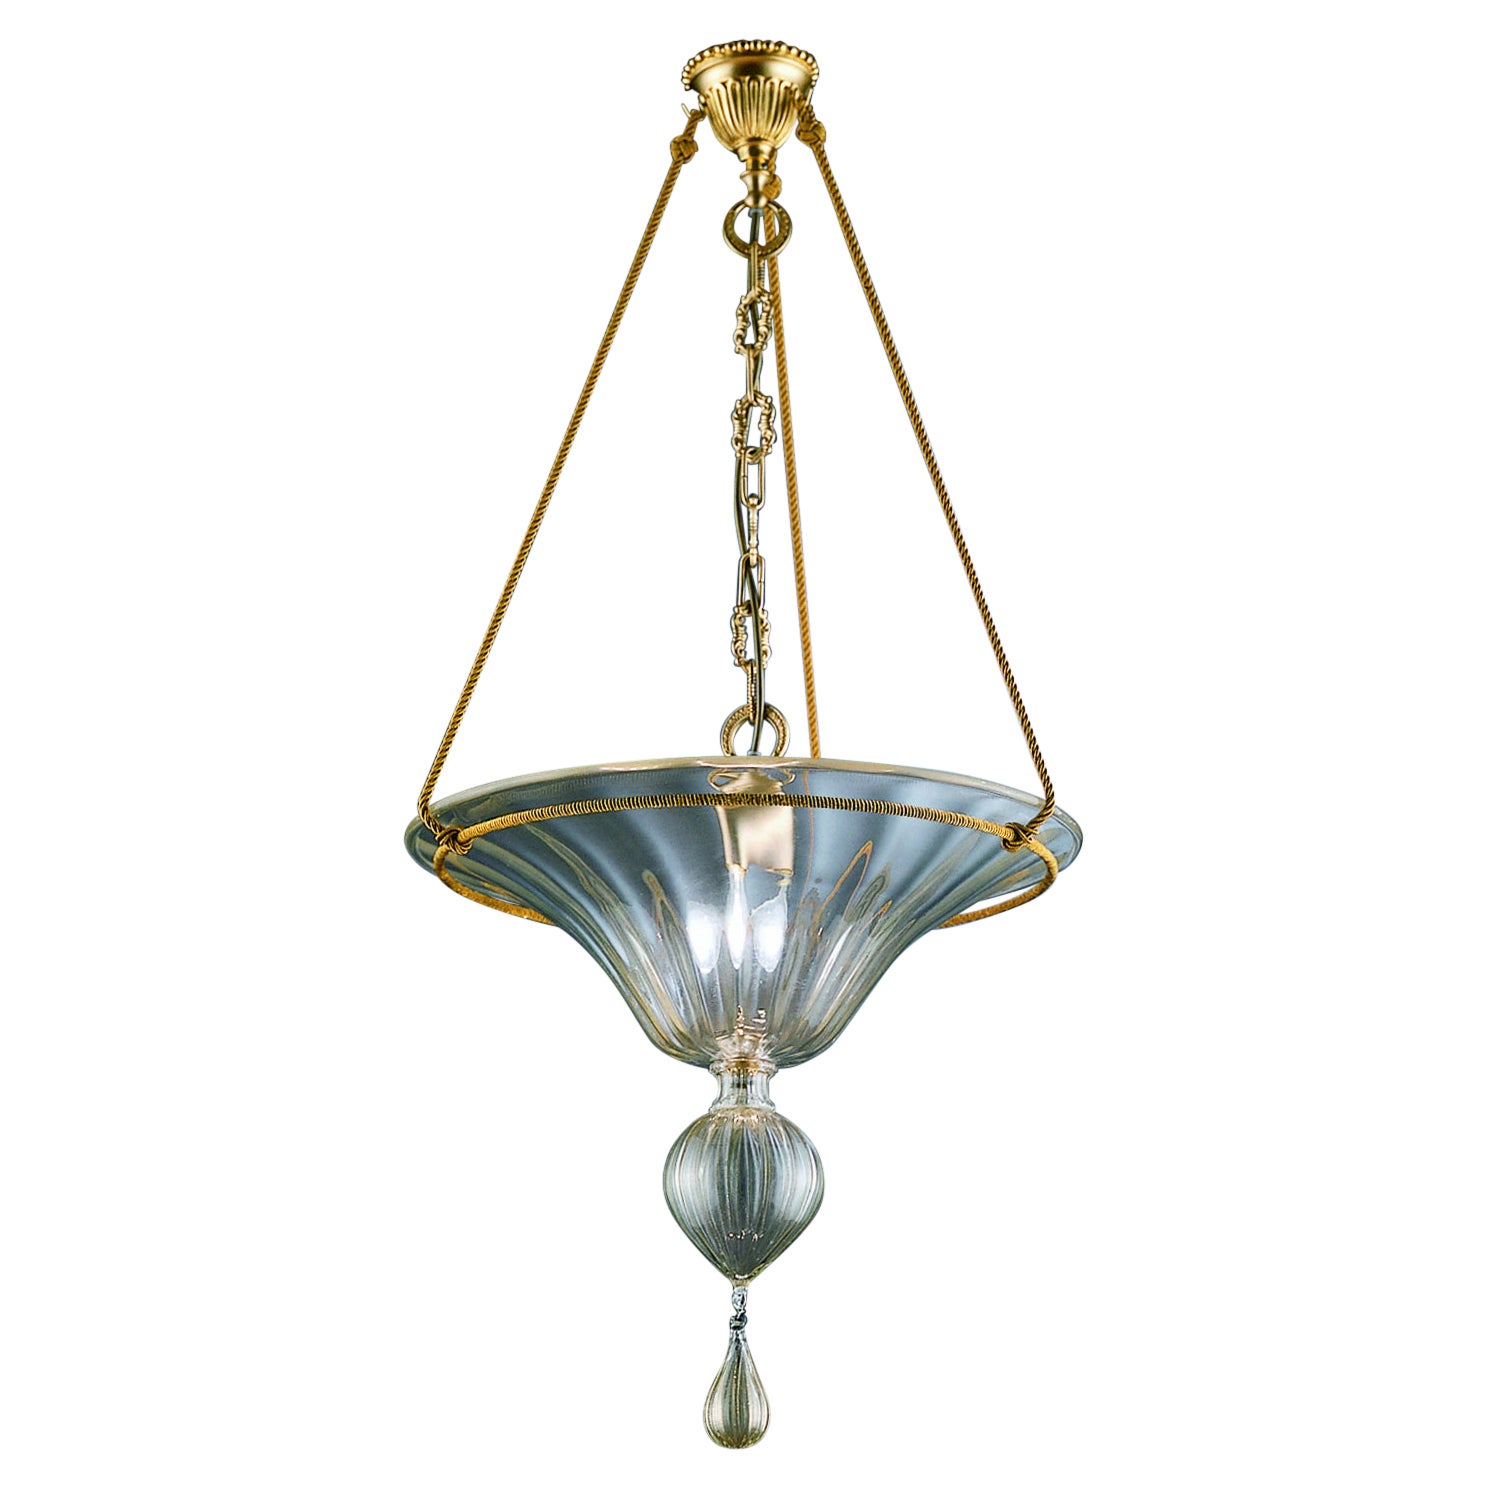 Artistic Handmade Murano Glass Chandelier Ouverture by La Murrina